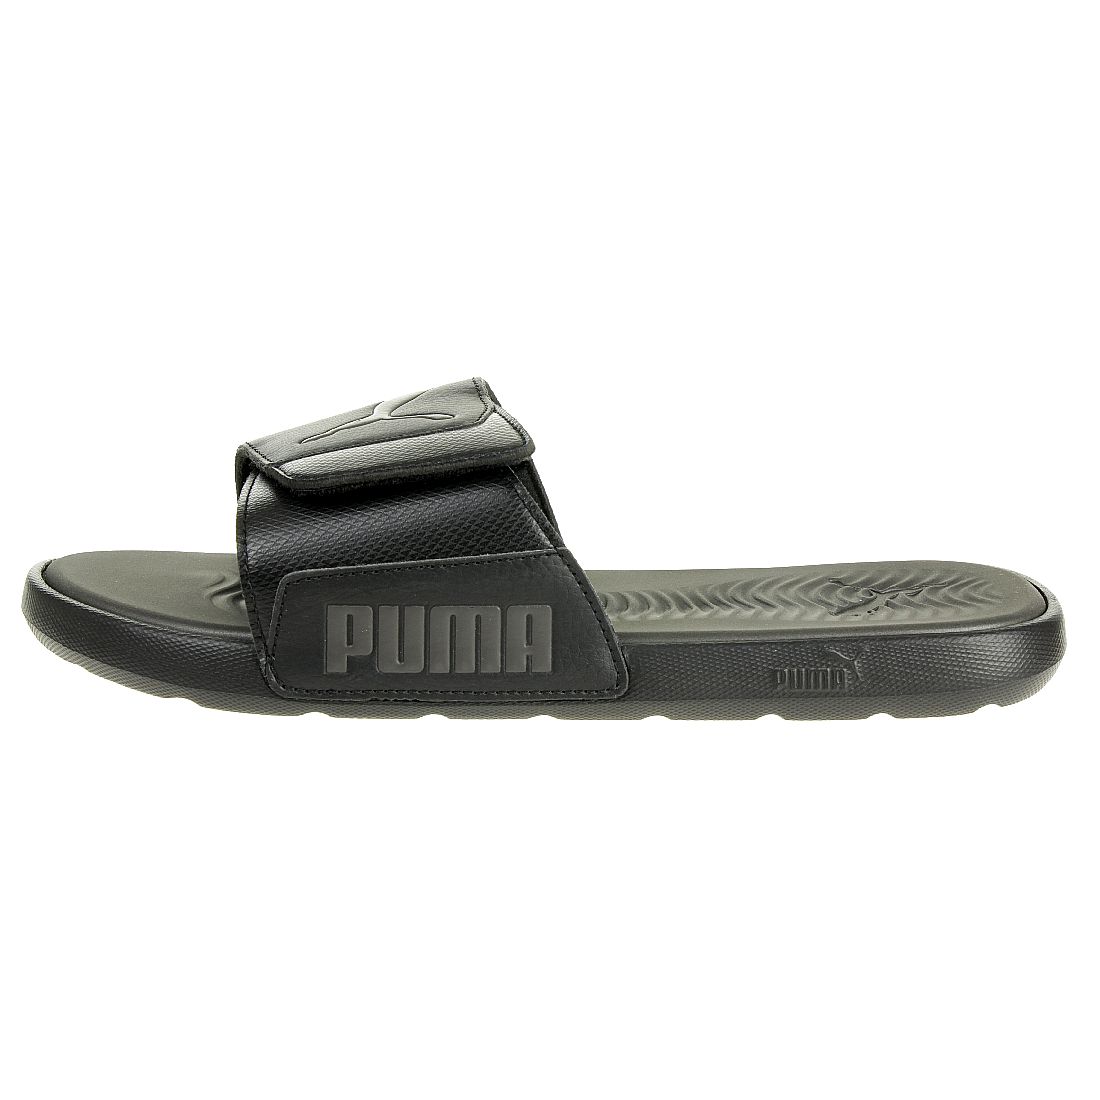 Puma Starcat Tech Unisex-Erwachsene Sandalen Softfoam schwarz 367228 01